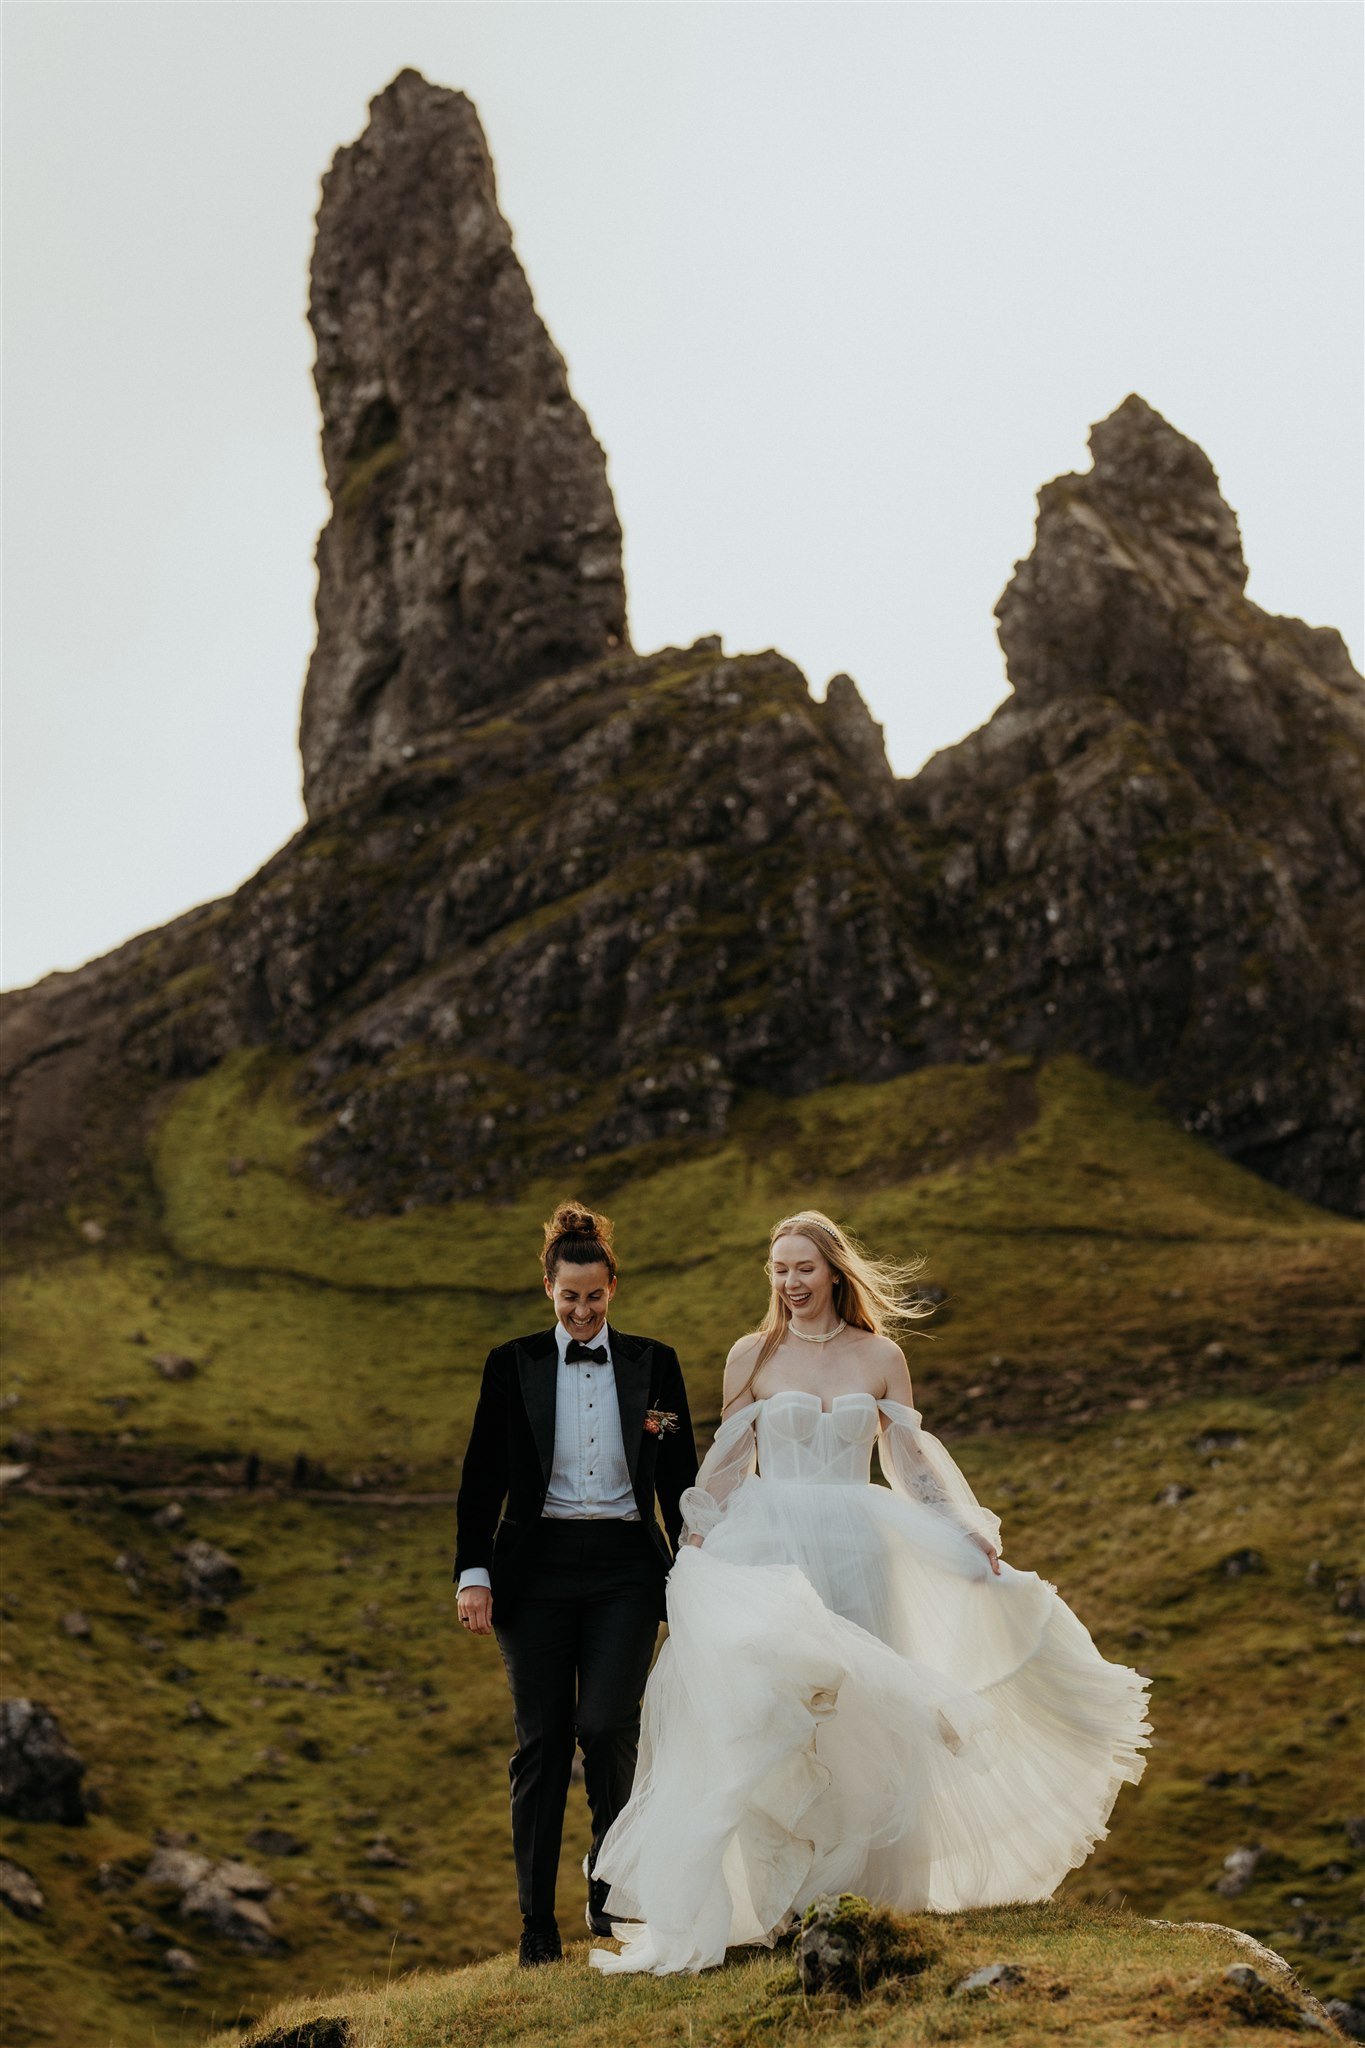 Brides run through the hills during their Isle of Skye Scotland elopement